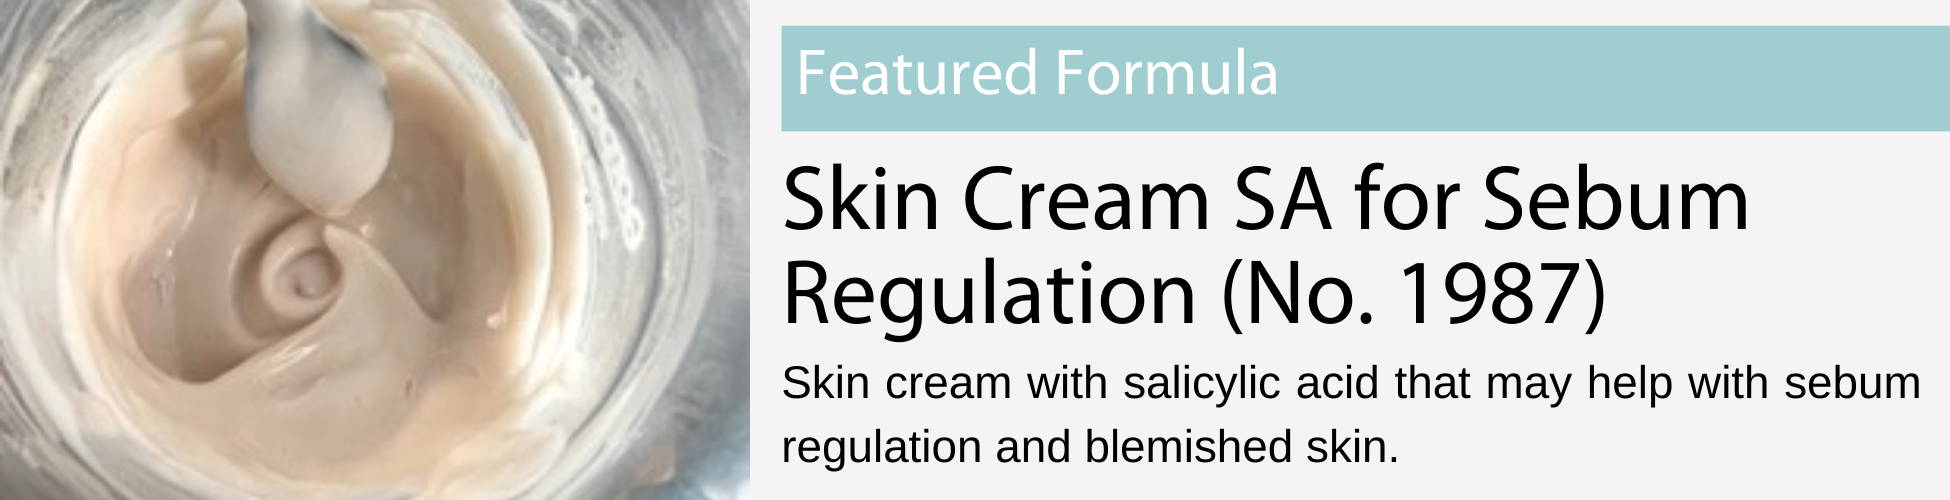 Formula for Skin Cream SA